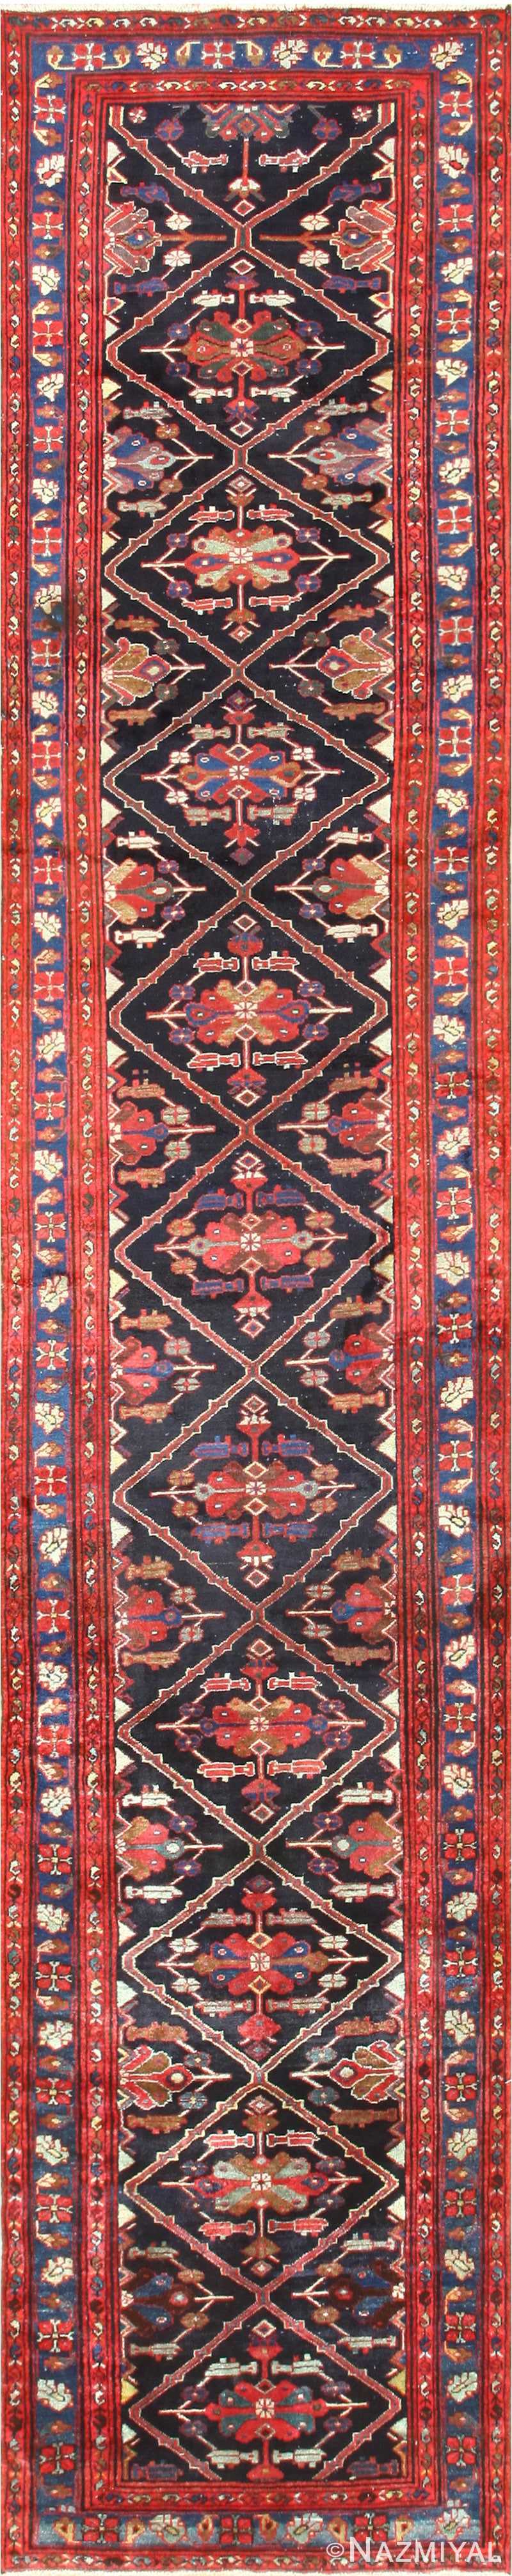 Full Antique Persian Malayer runner rug 50351 by Nazmiyal